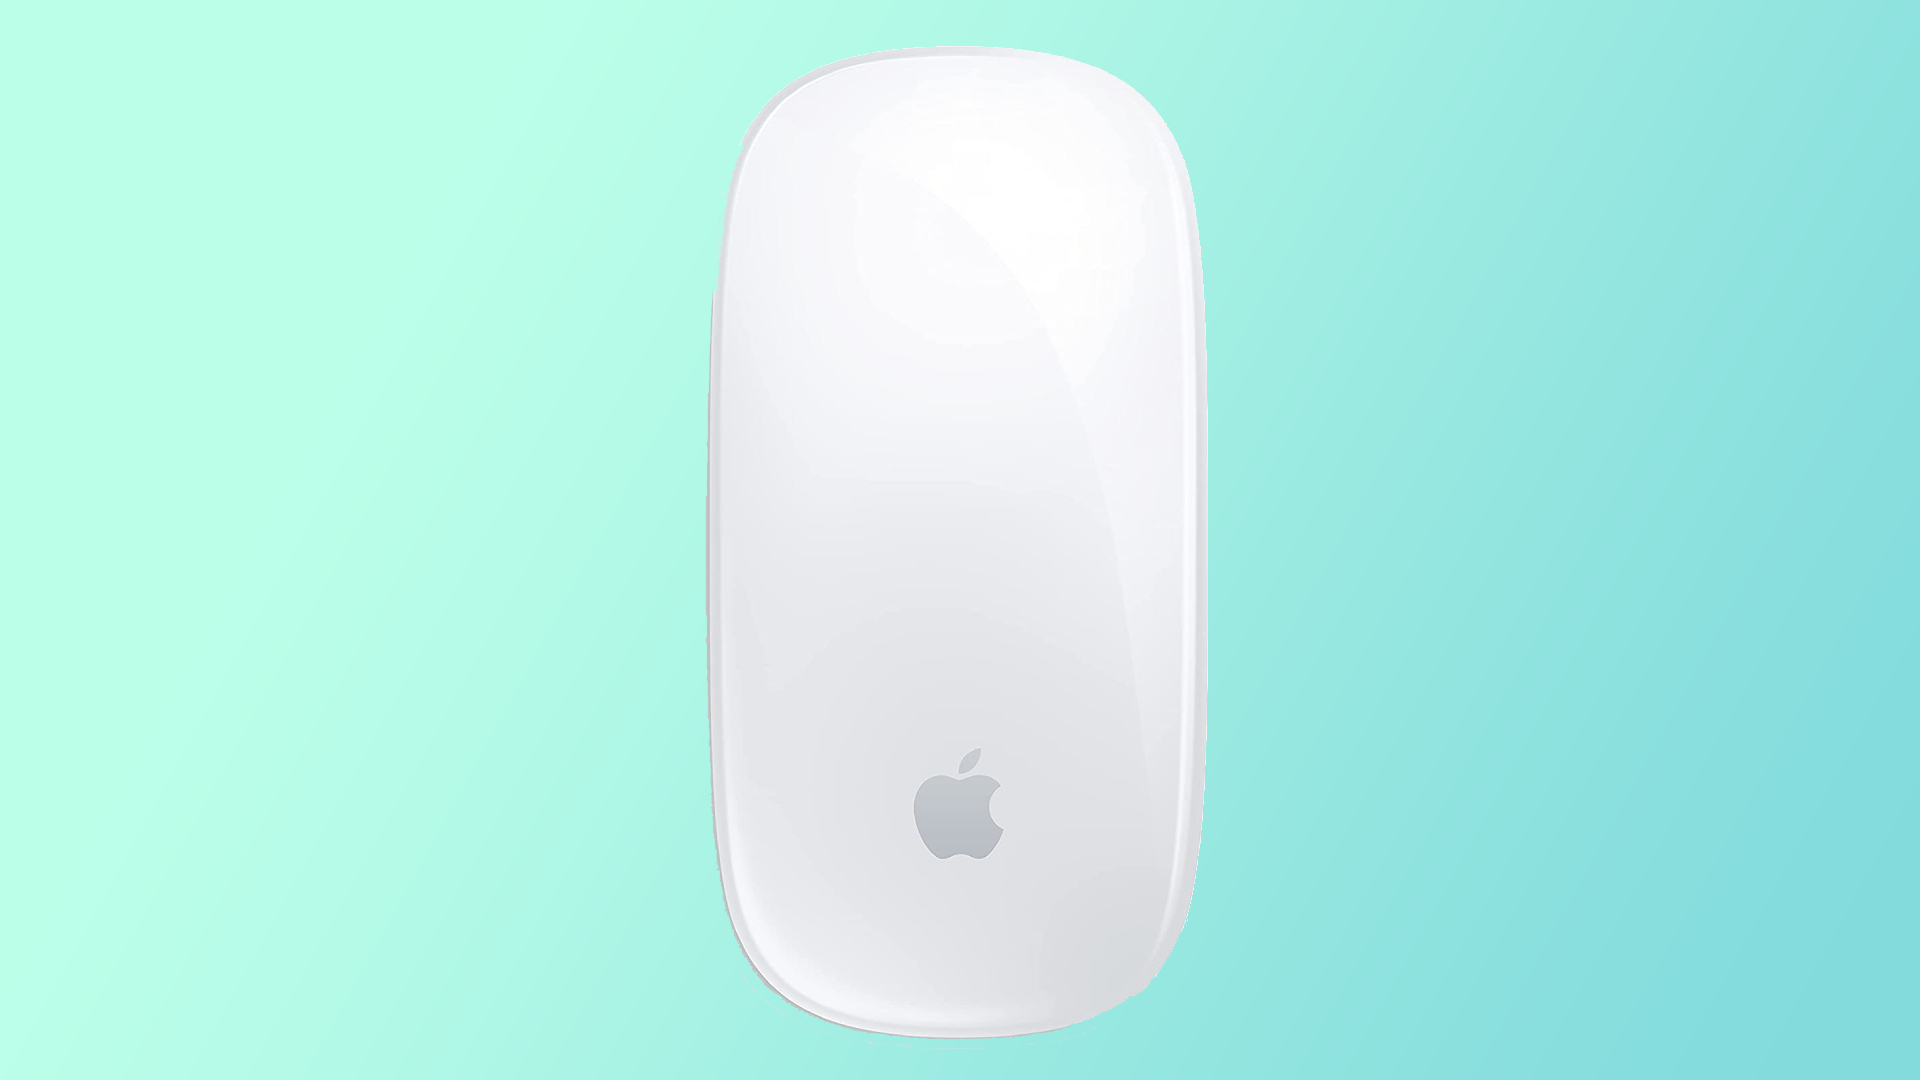 Best Mac Apple Mouse 2021